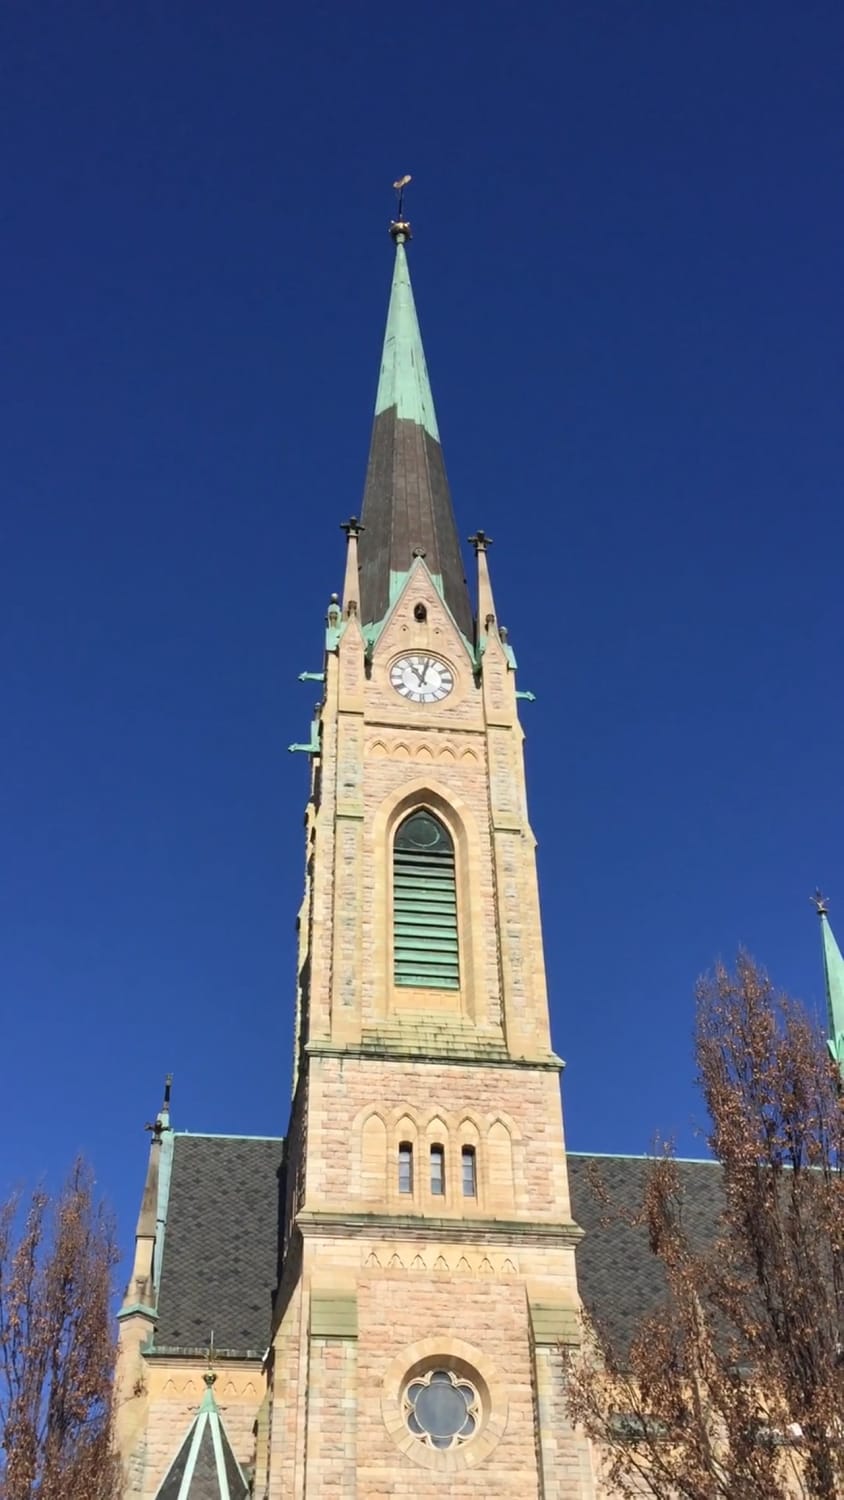 Beautiful Stockholm - Church bells ringing